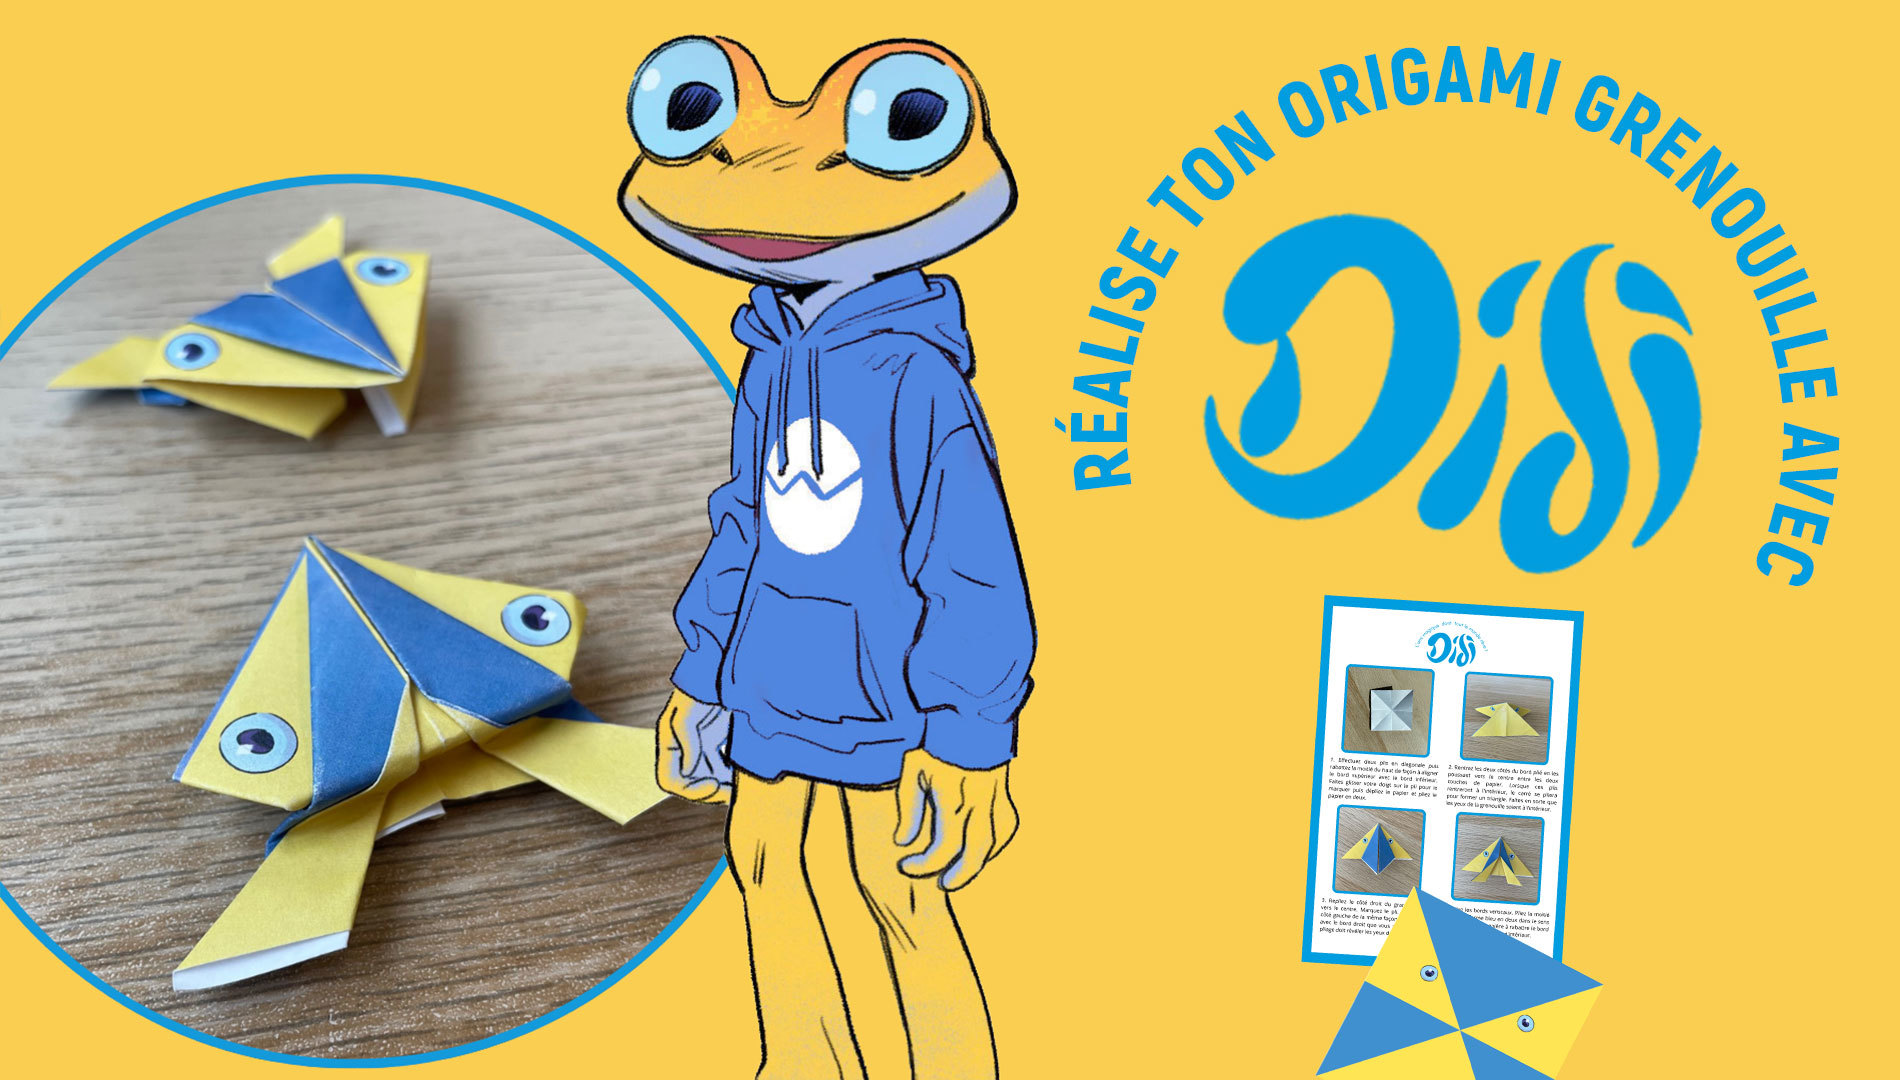 Réalise ton origami grenouille avec Didi !